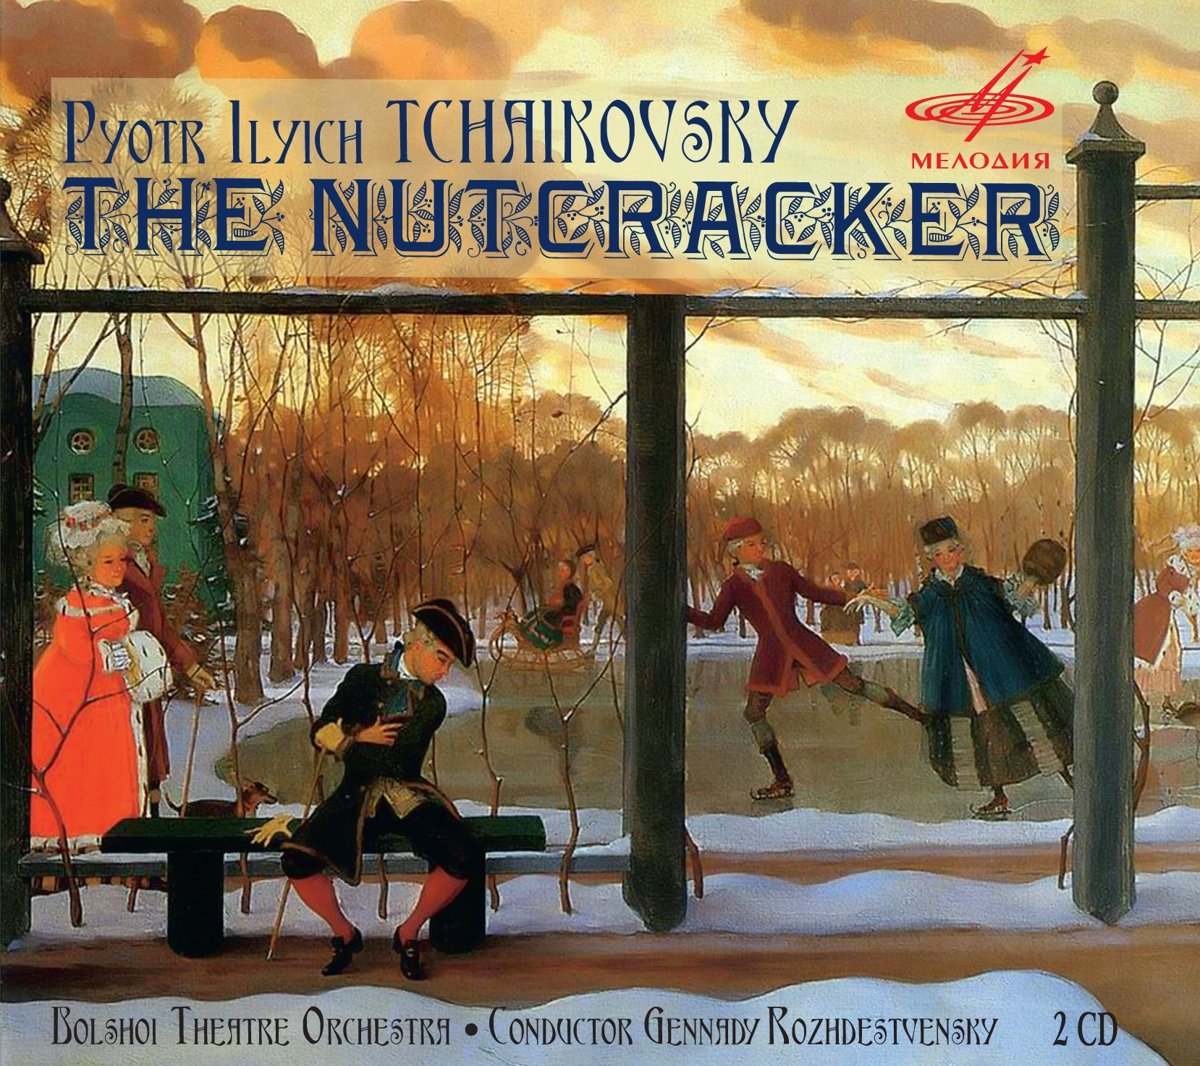 TCHAIKOVSKY: The Nutcracker - Bolshoi Theatre Orchestra, Gennady Rozhdestvensky (2 CDs)